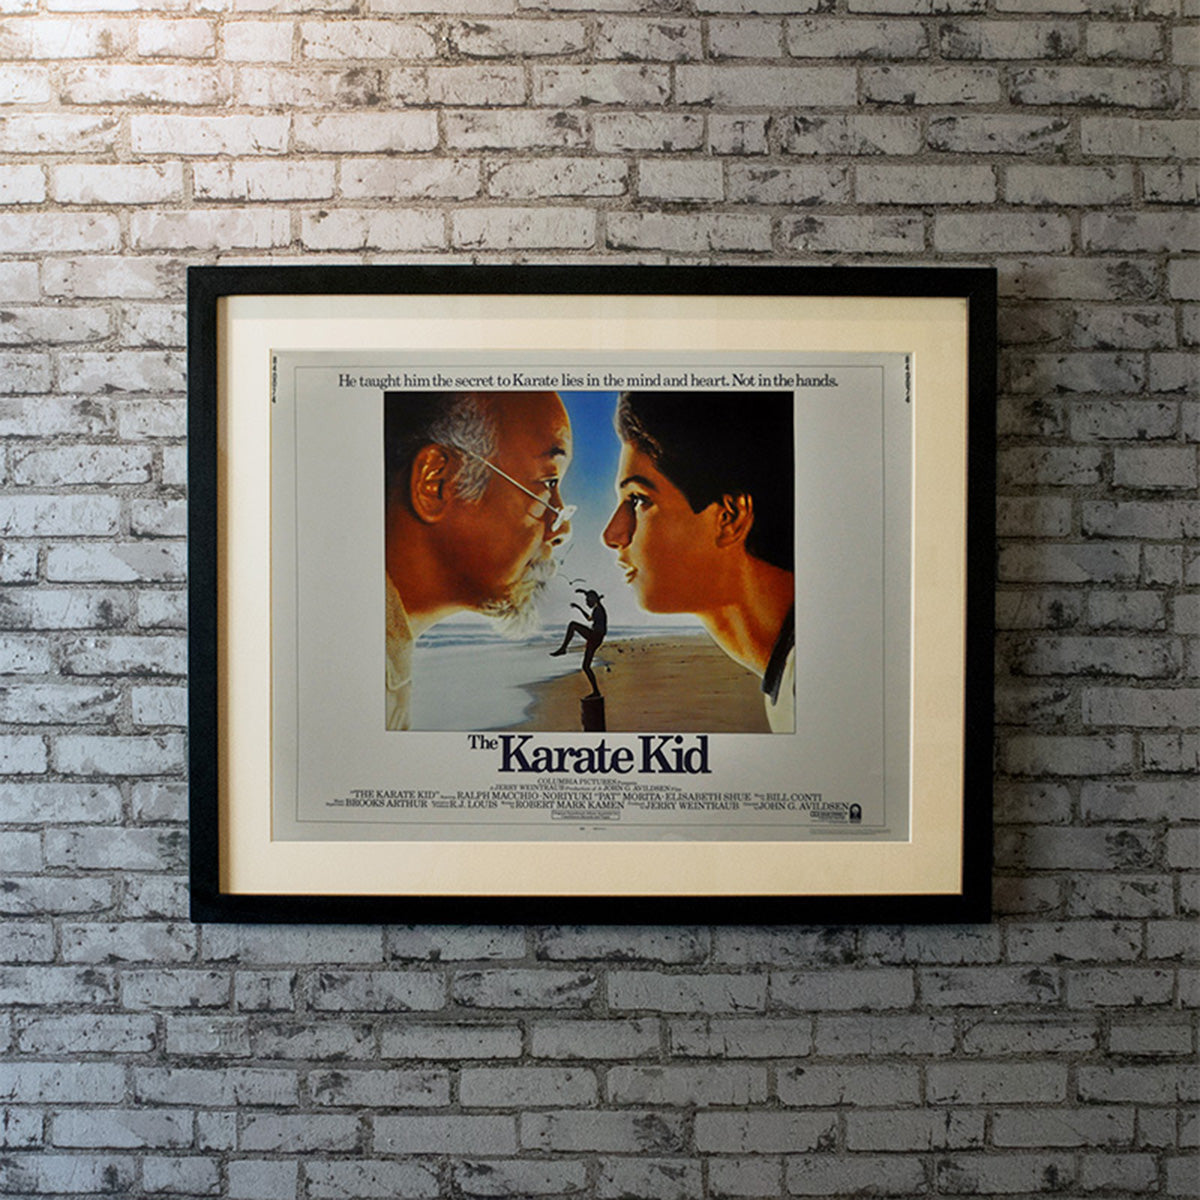 Original Movie Poster of Karate Kid, The (1984)